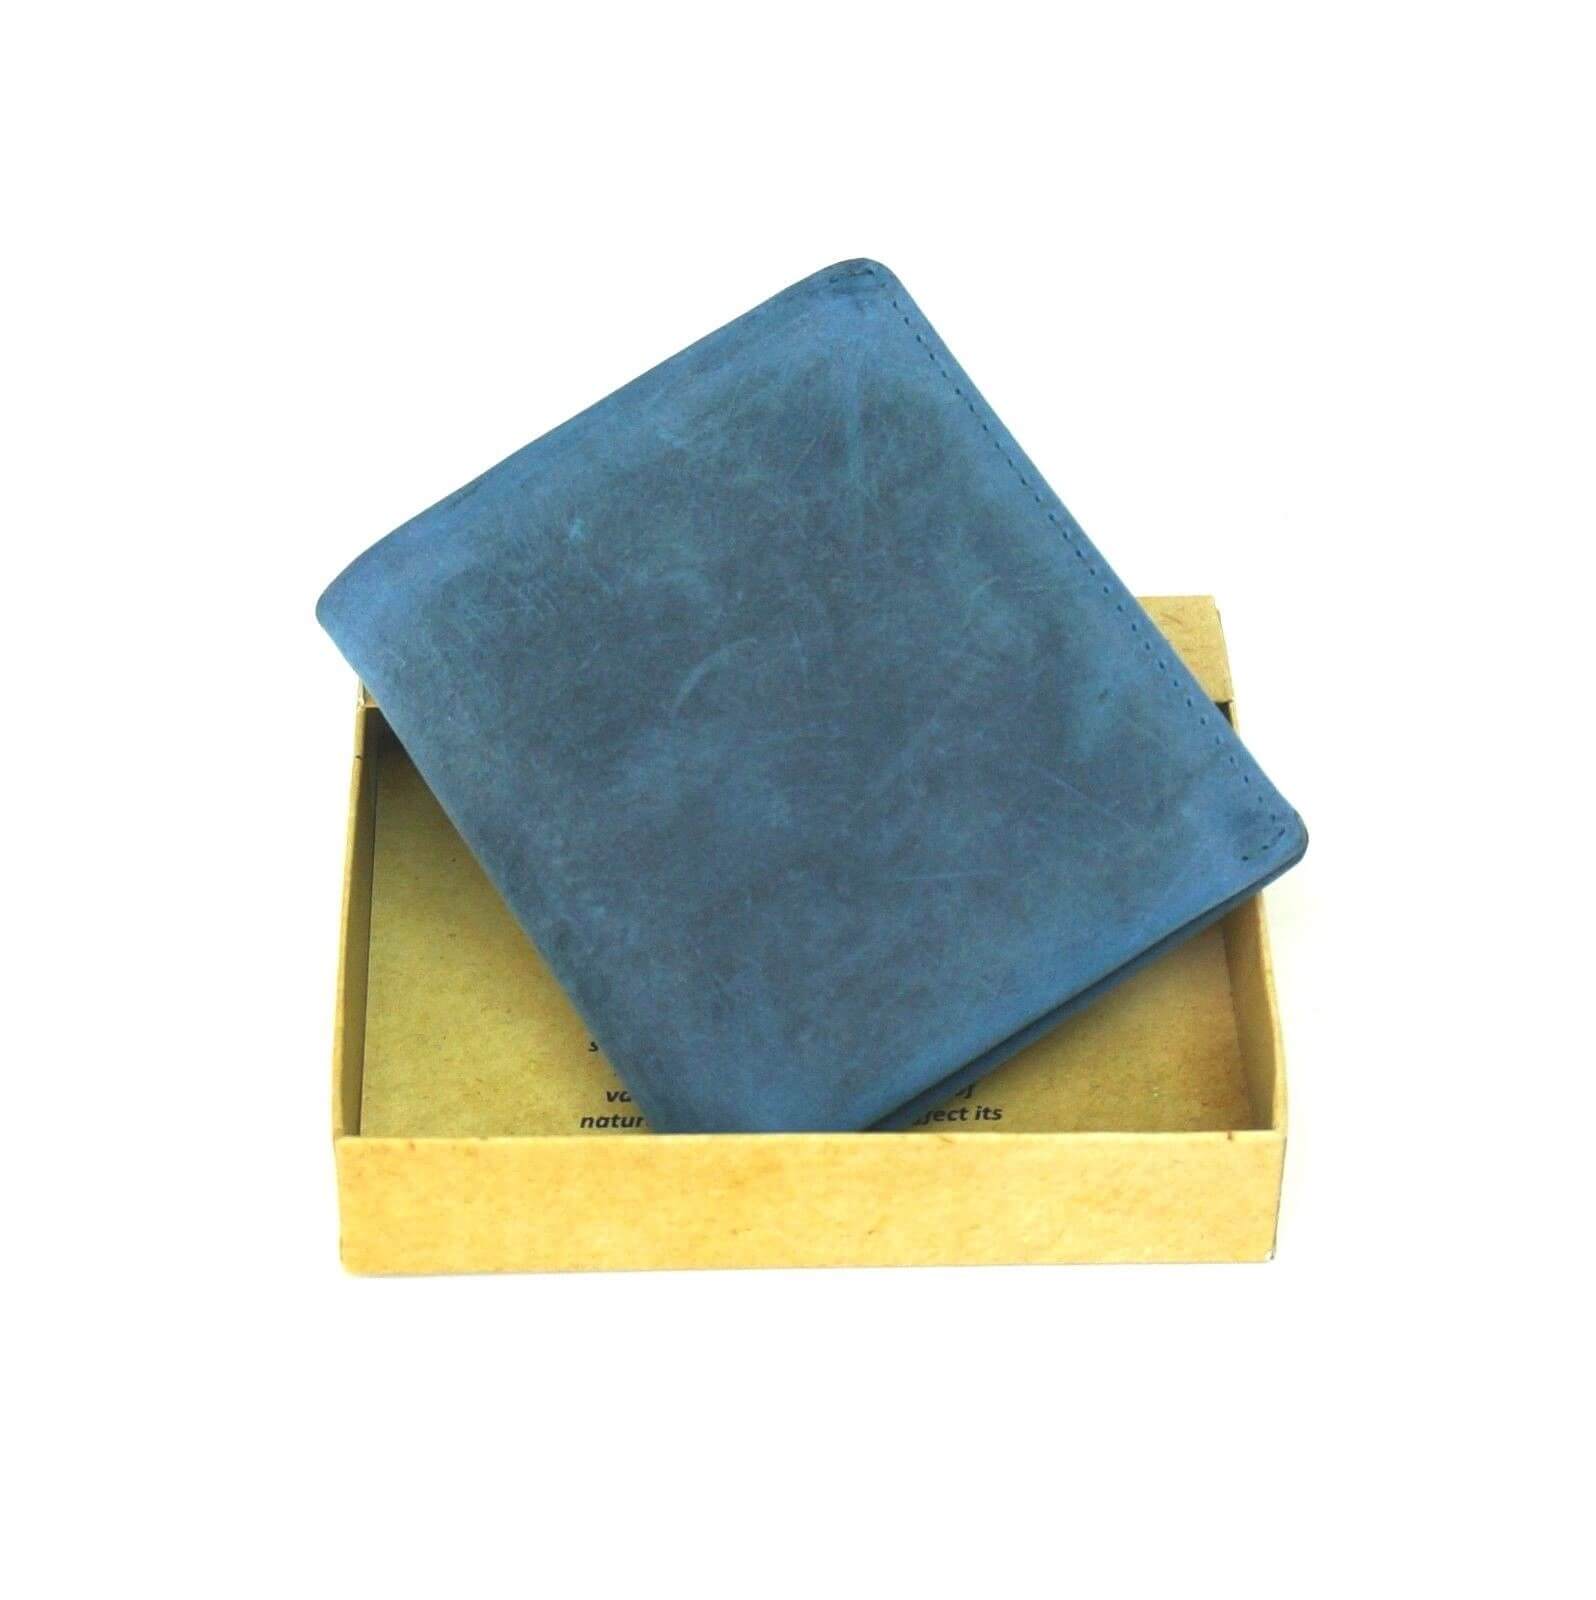 Personalised Minimalist Leather Wallet- BLUE - KALGHI LEATHER